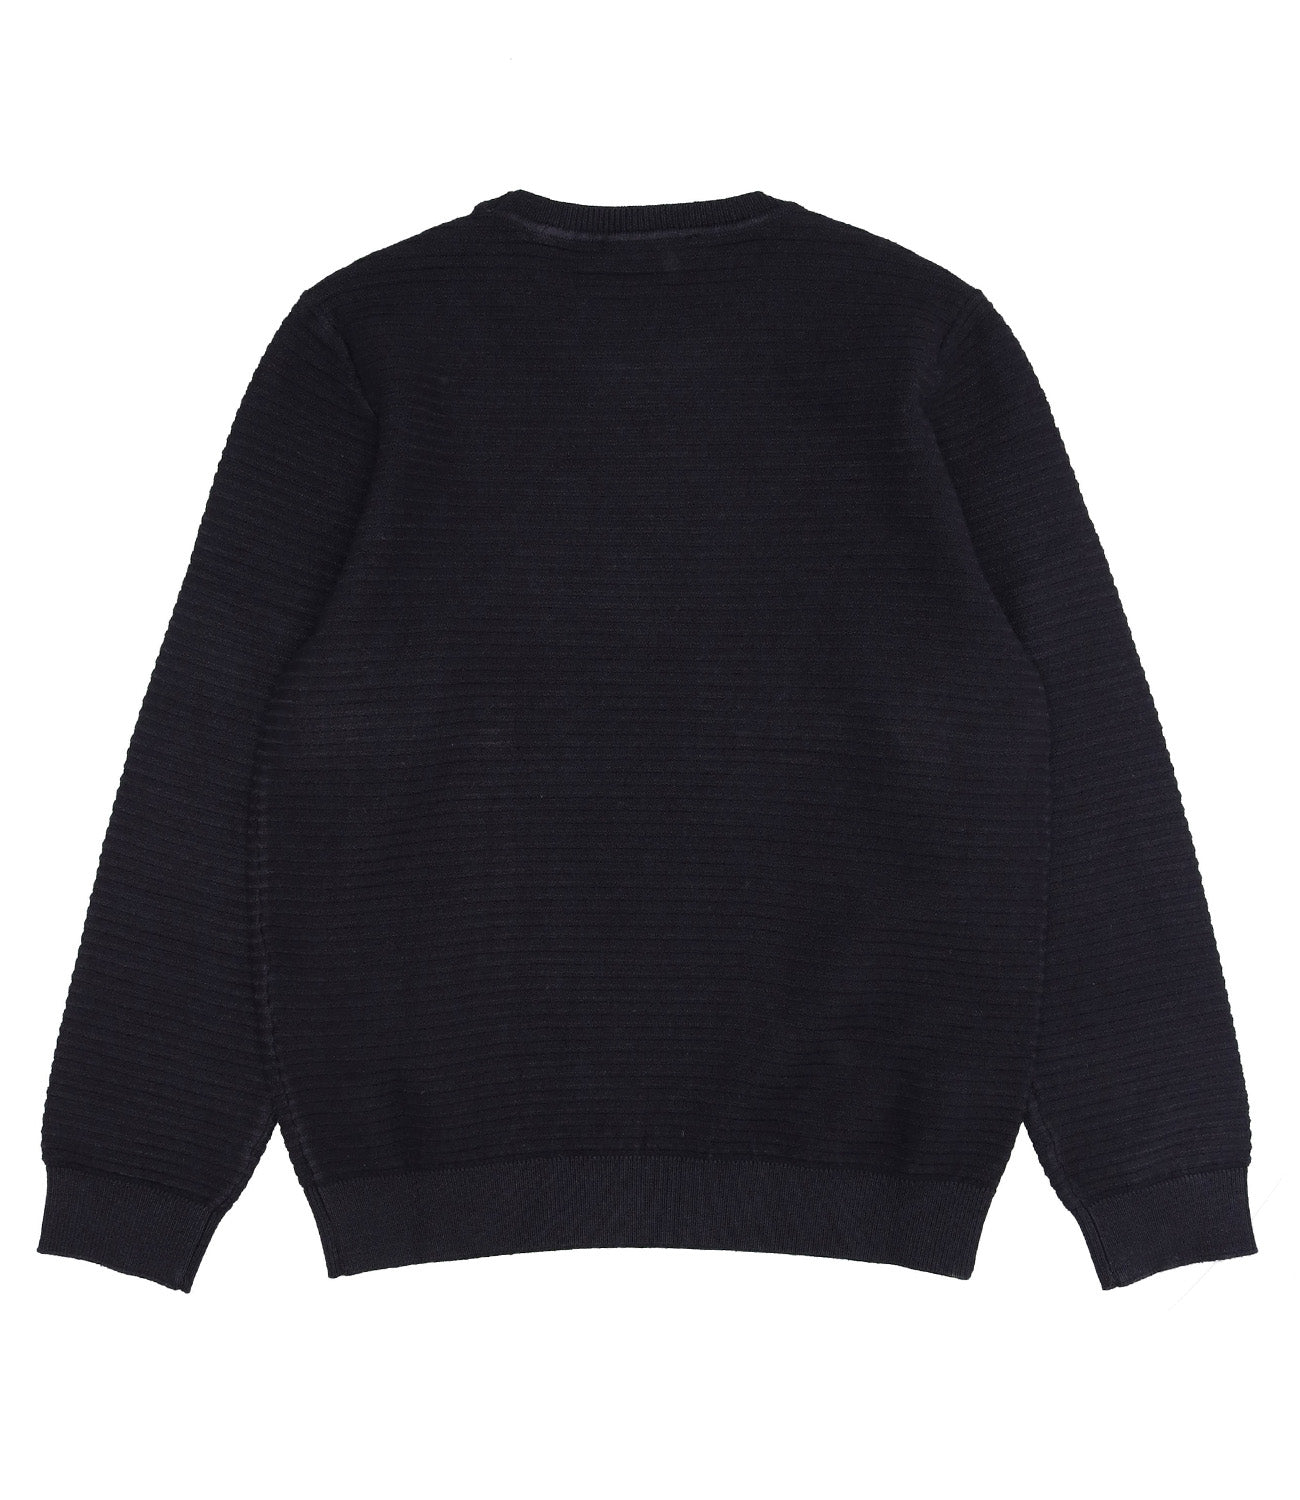 Navy Blue Sweater